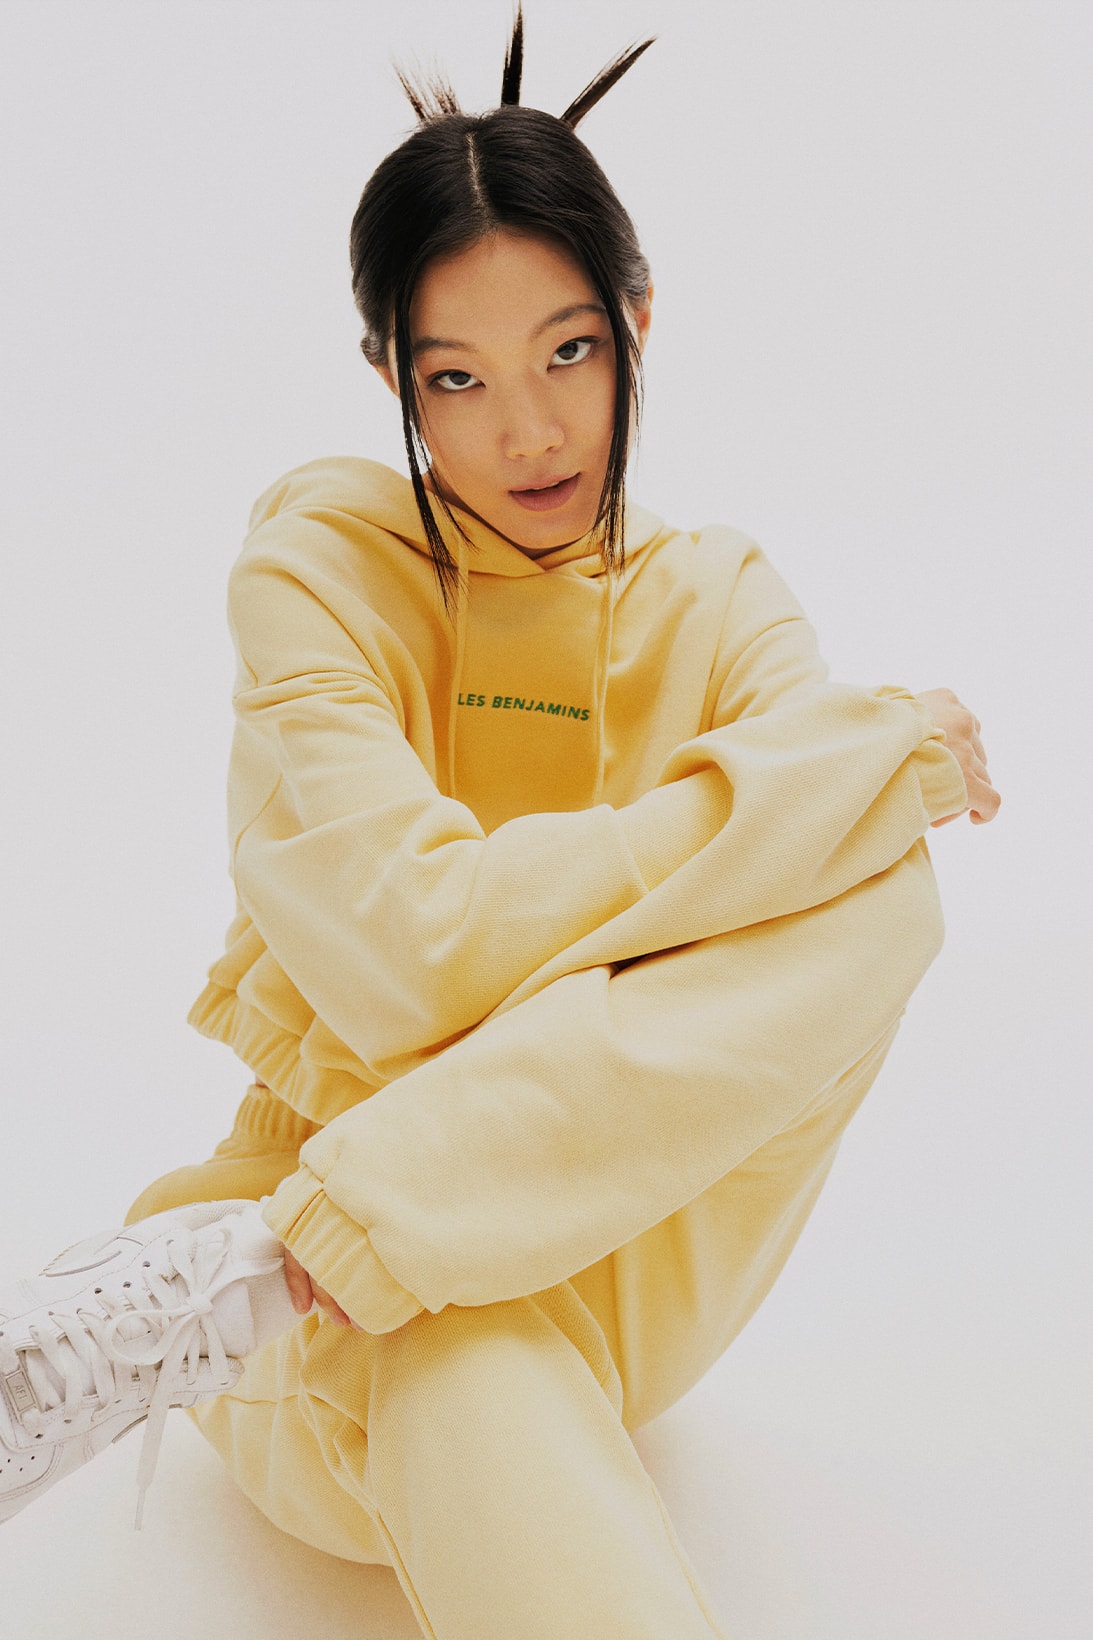 Les Benjamins "Essentials 4.0" Collection Streetwear Hoodies Sweatpants Yellow